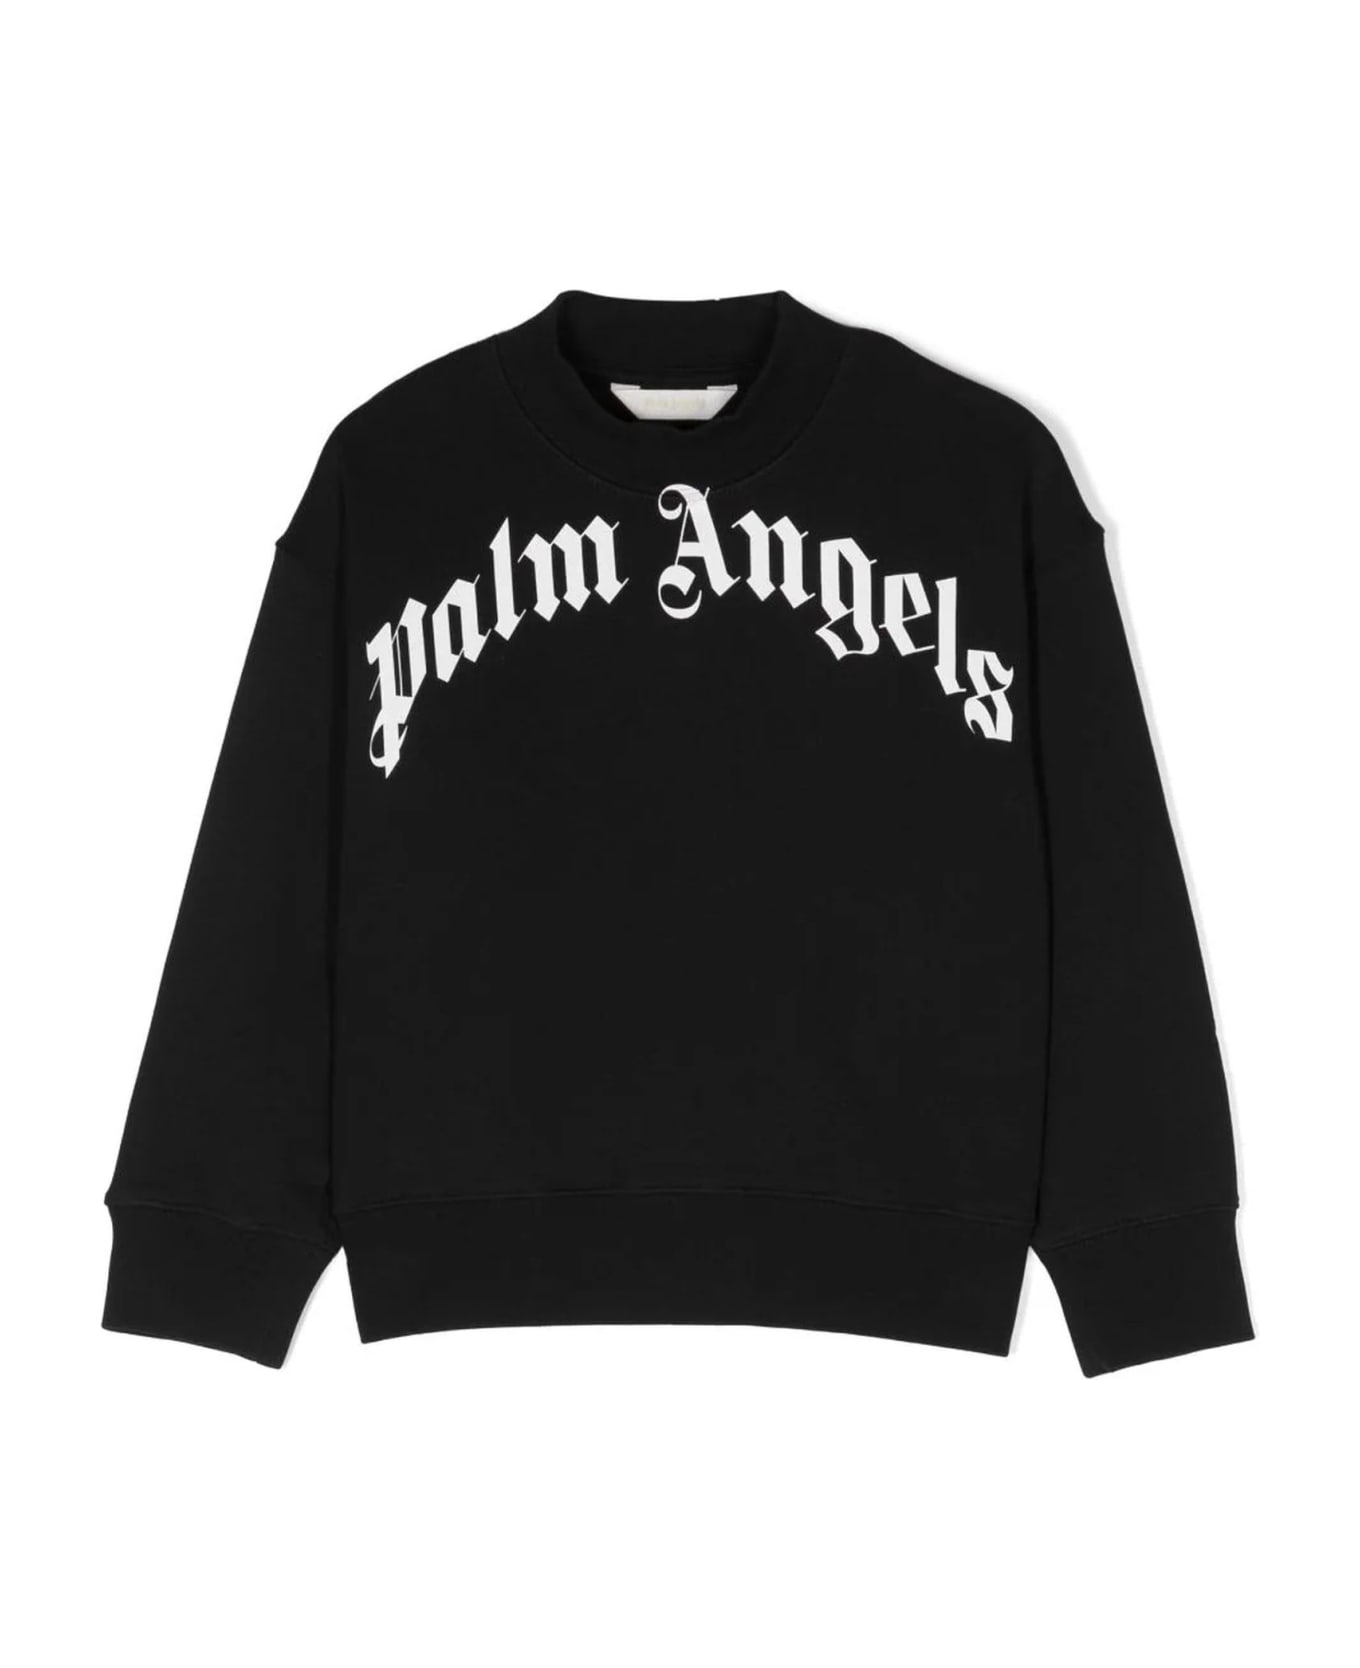 Palm Angels Sweaters Black - Black